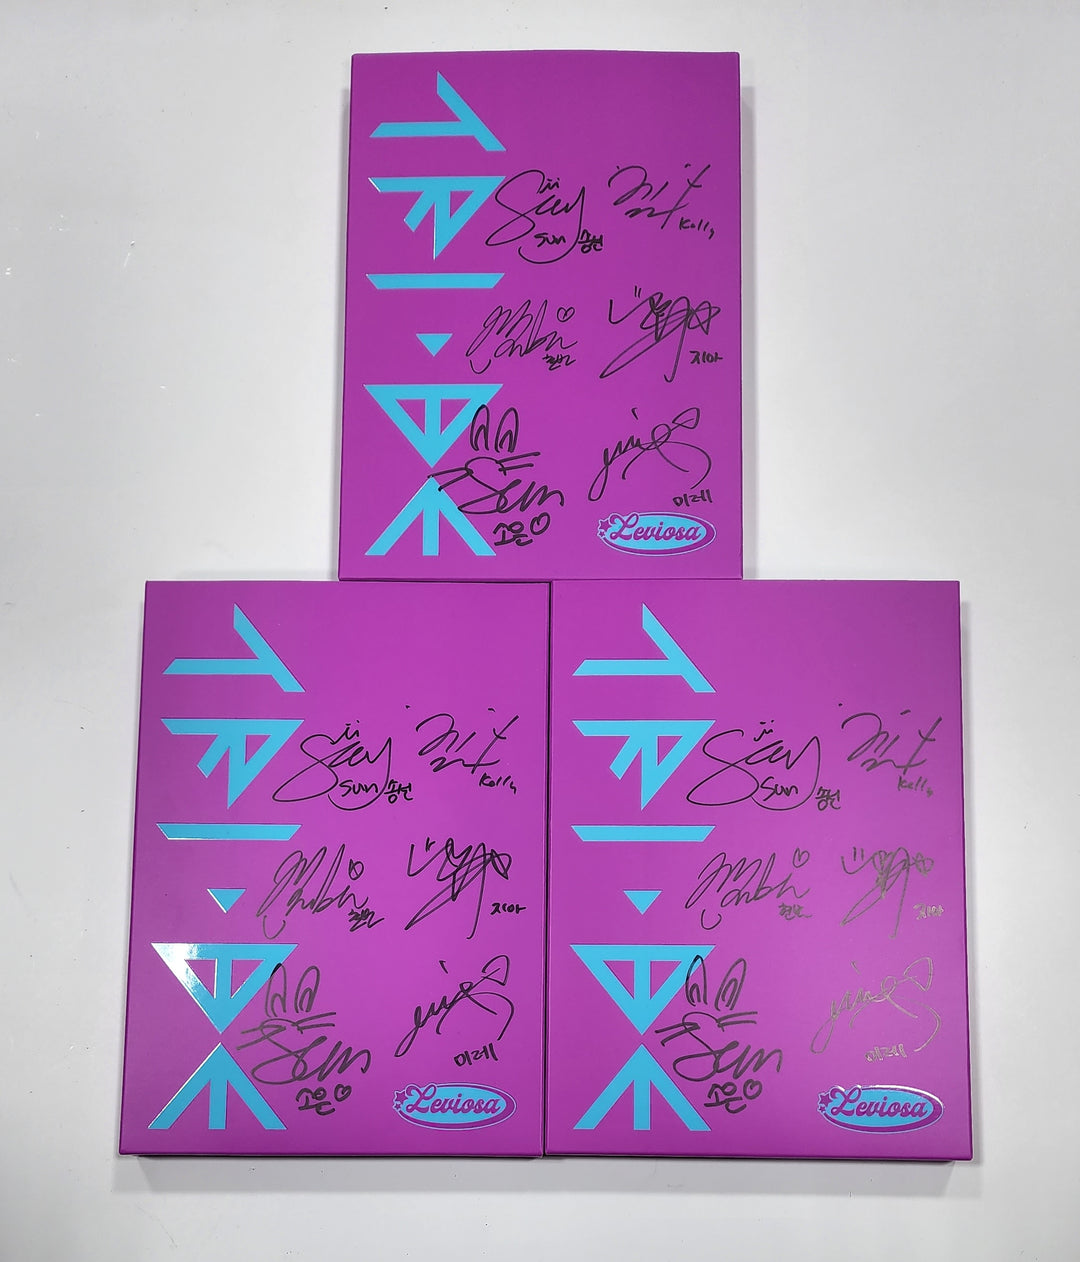 TRI.BE 'LEVIOSA' - Hand Autographed(Signed) Promo Album